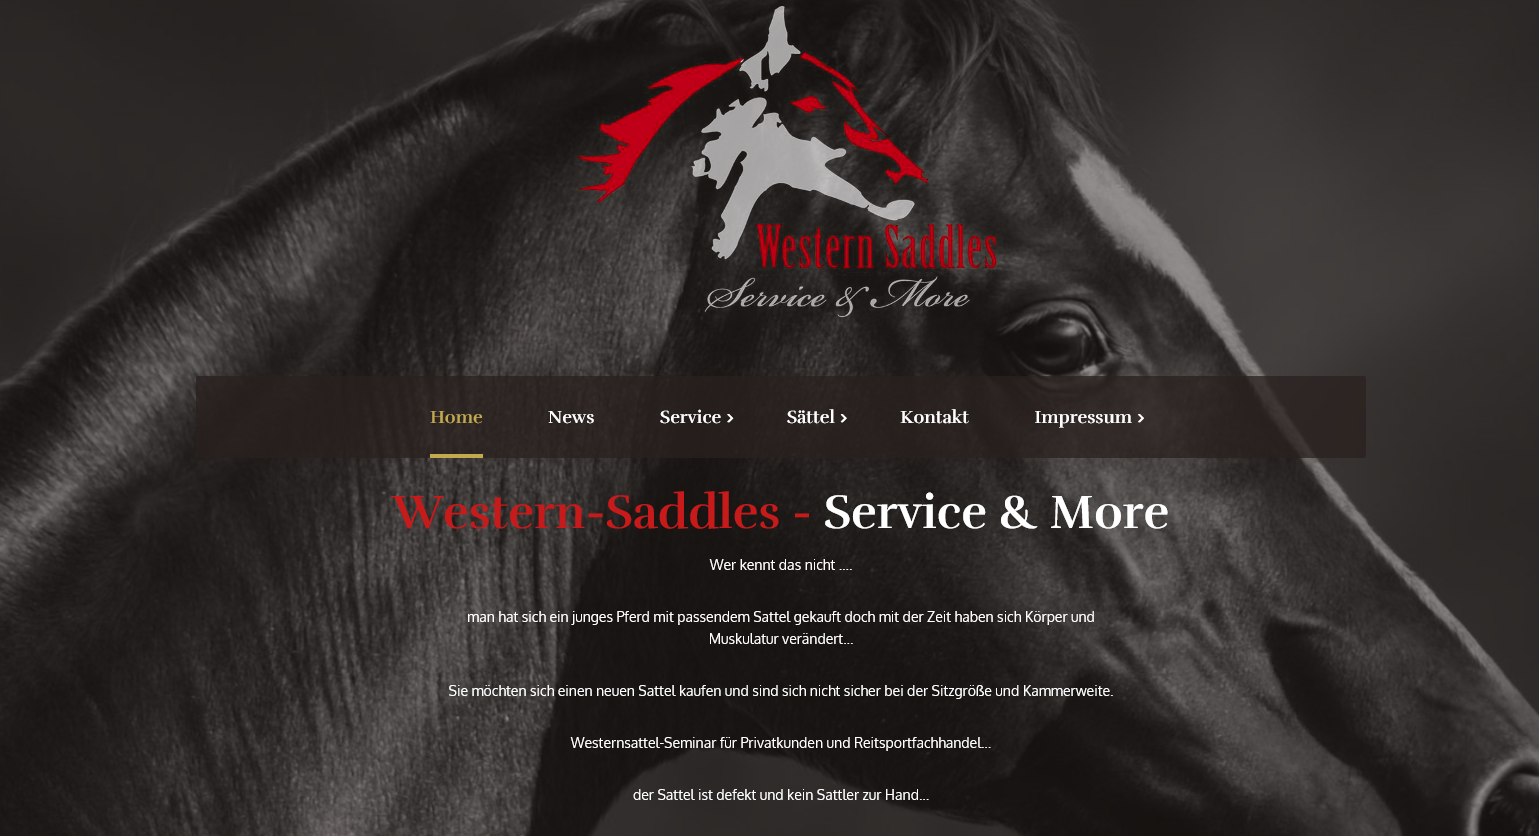 (c) Western-saddles-service-and-more.com